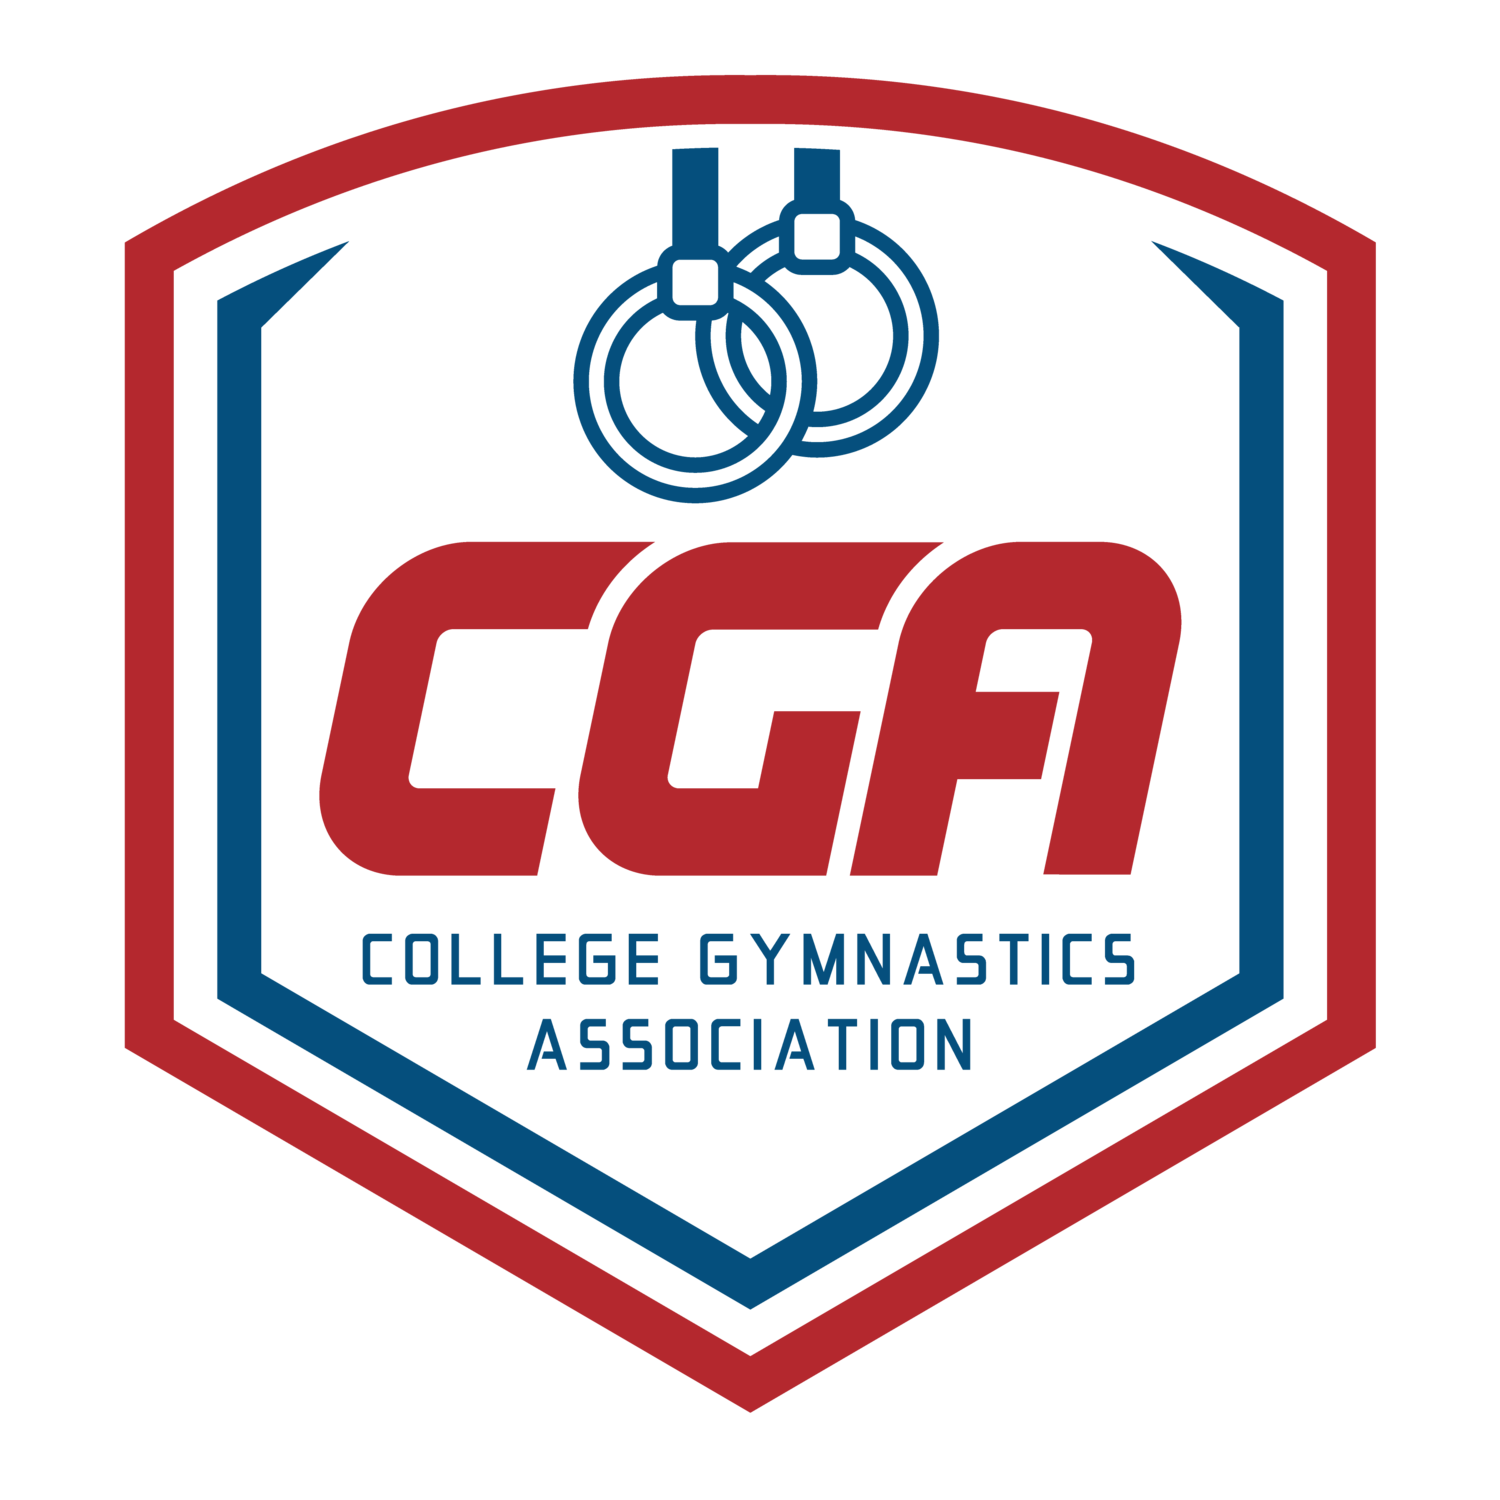 College Gymnastics Association